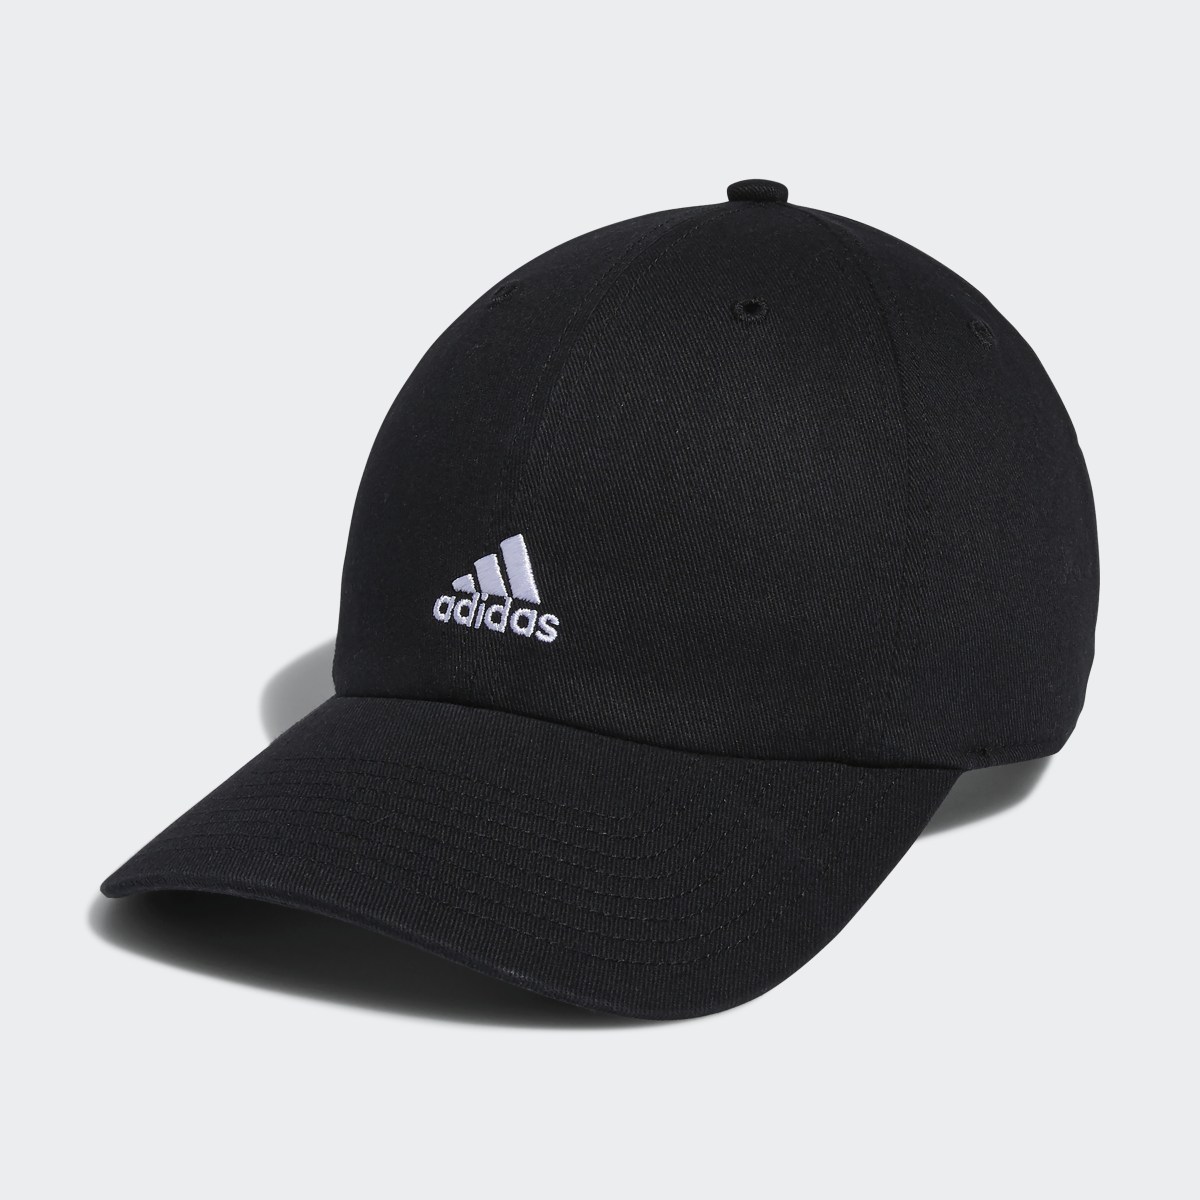 Adidas Saturday Hat. 4